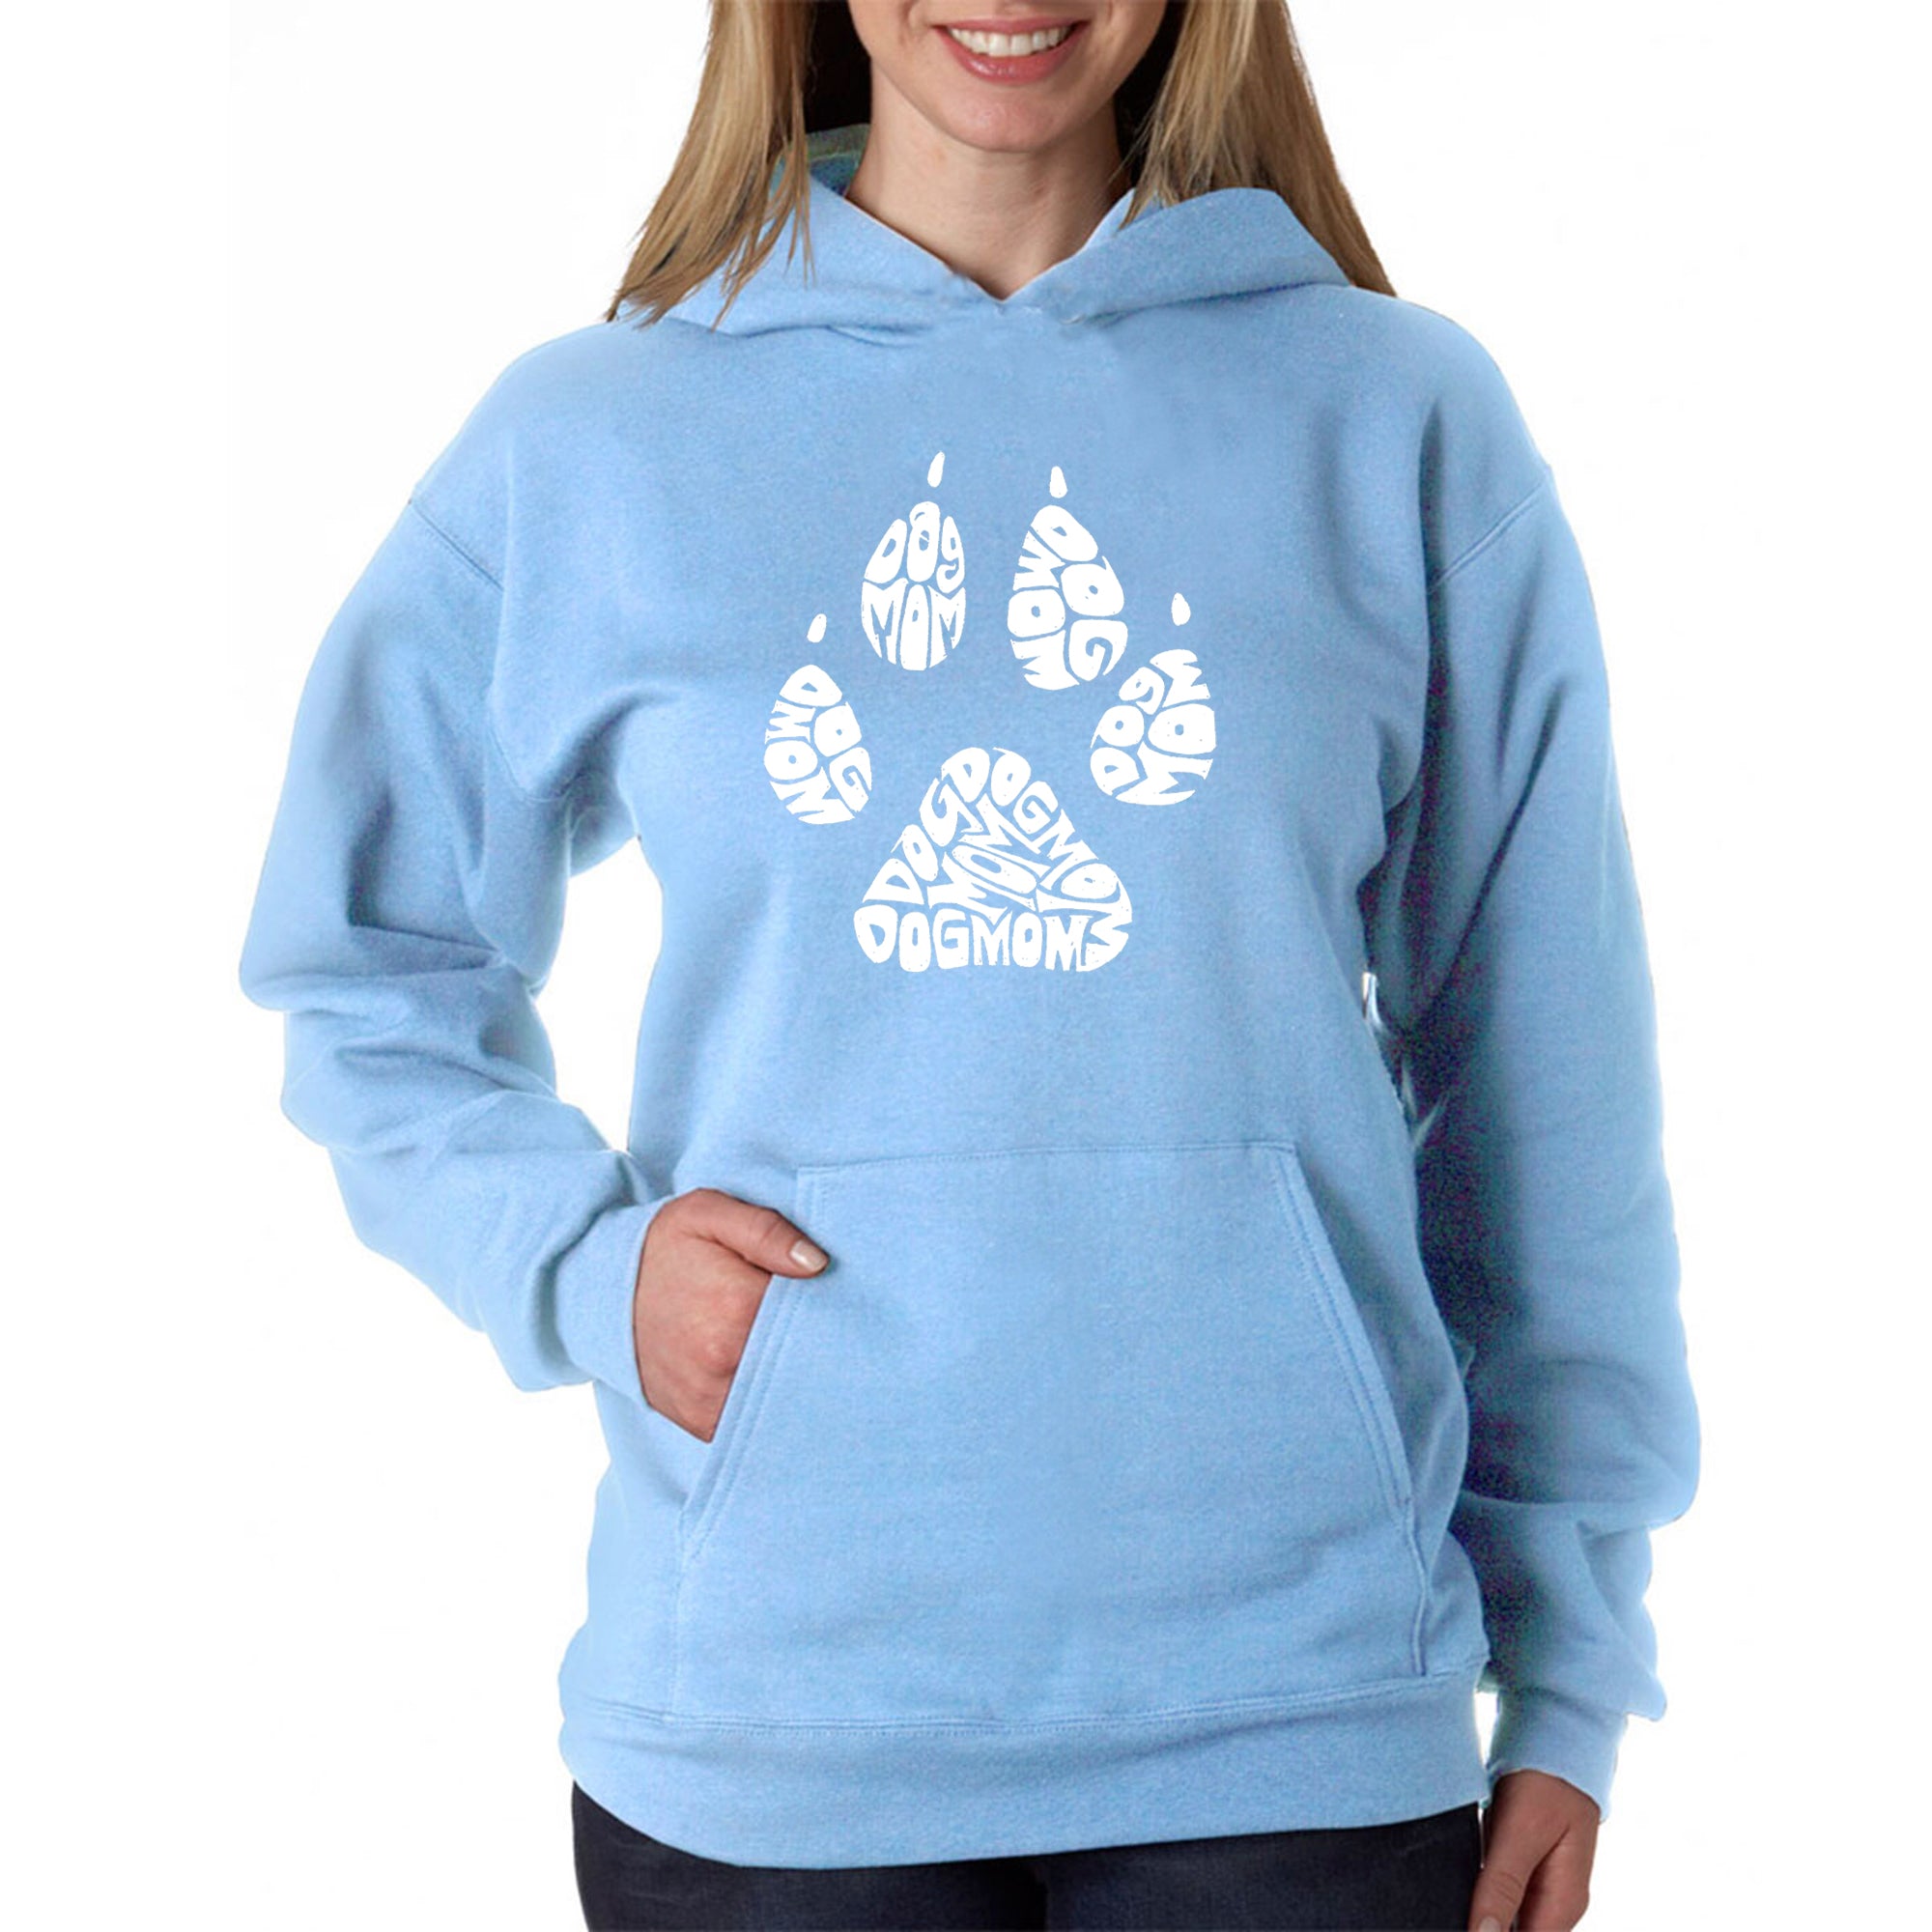 Dog Mom - Women's Word Art Hooded Sweatshirt - Blue - Large